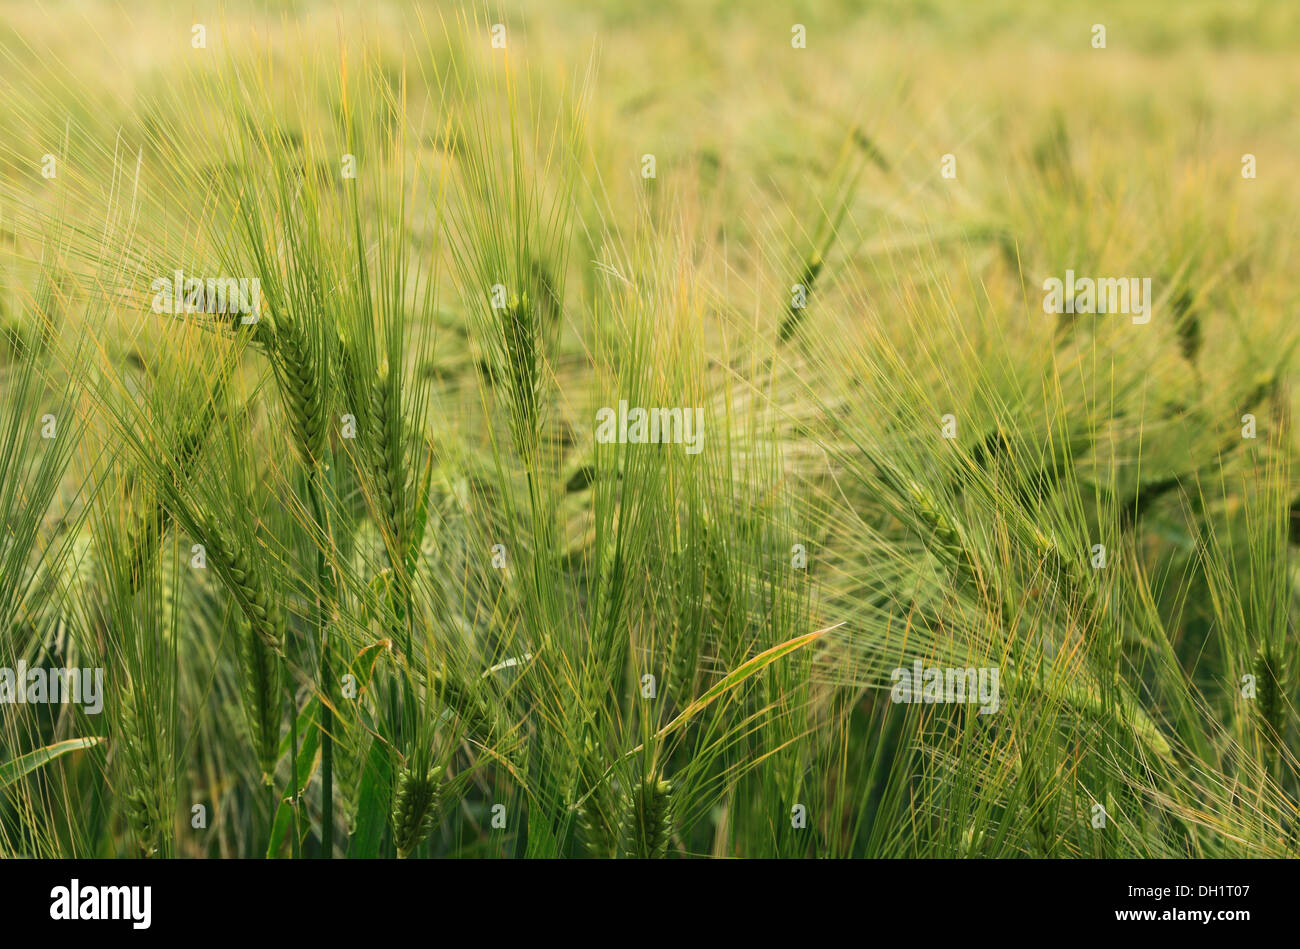 Cebada Hordeum vulgare, agricultura campo agrícola campos cultivos de cosecha de grano Norfolk UK Foto de stock